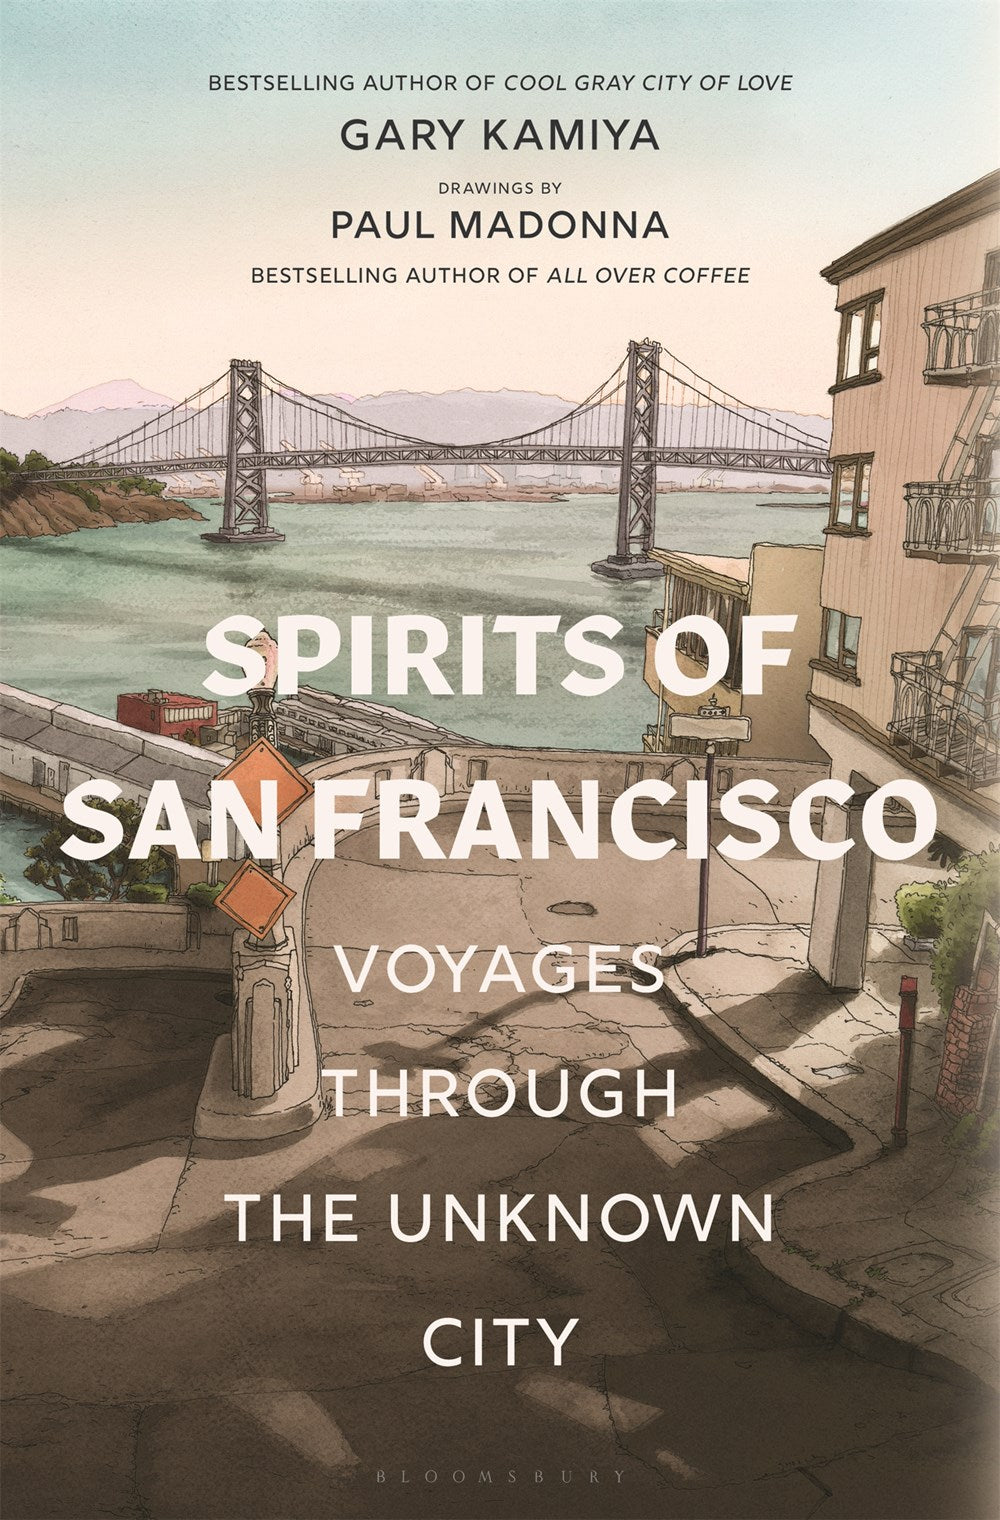 Spirits of San Francisco